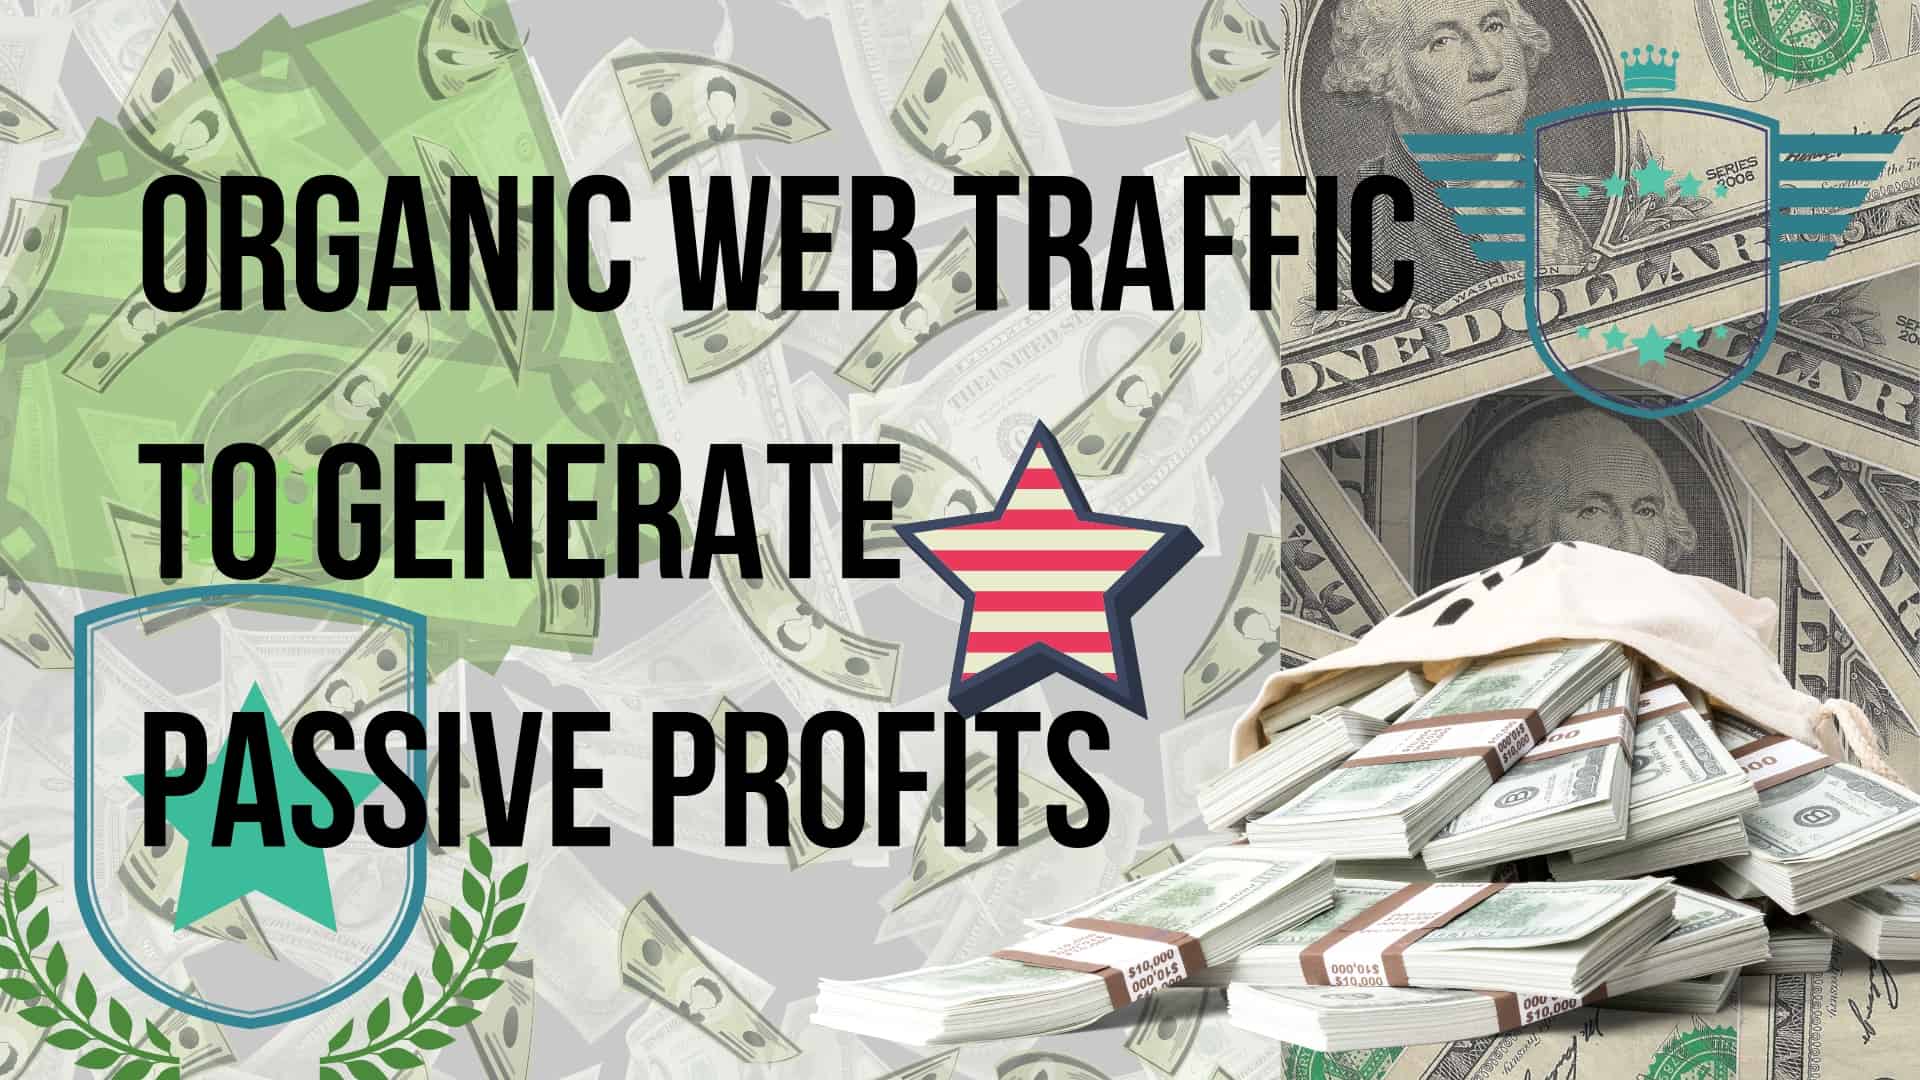 Organic web traffic to generate passive profits